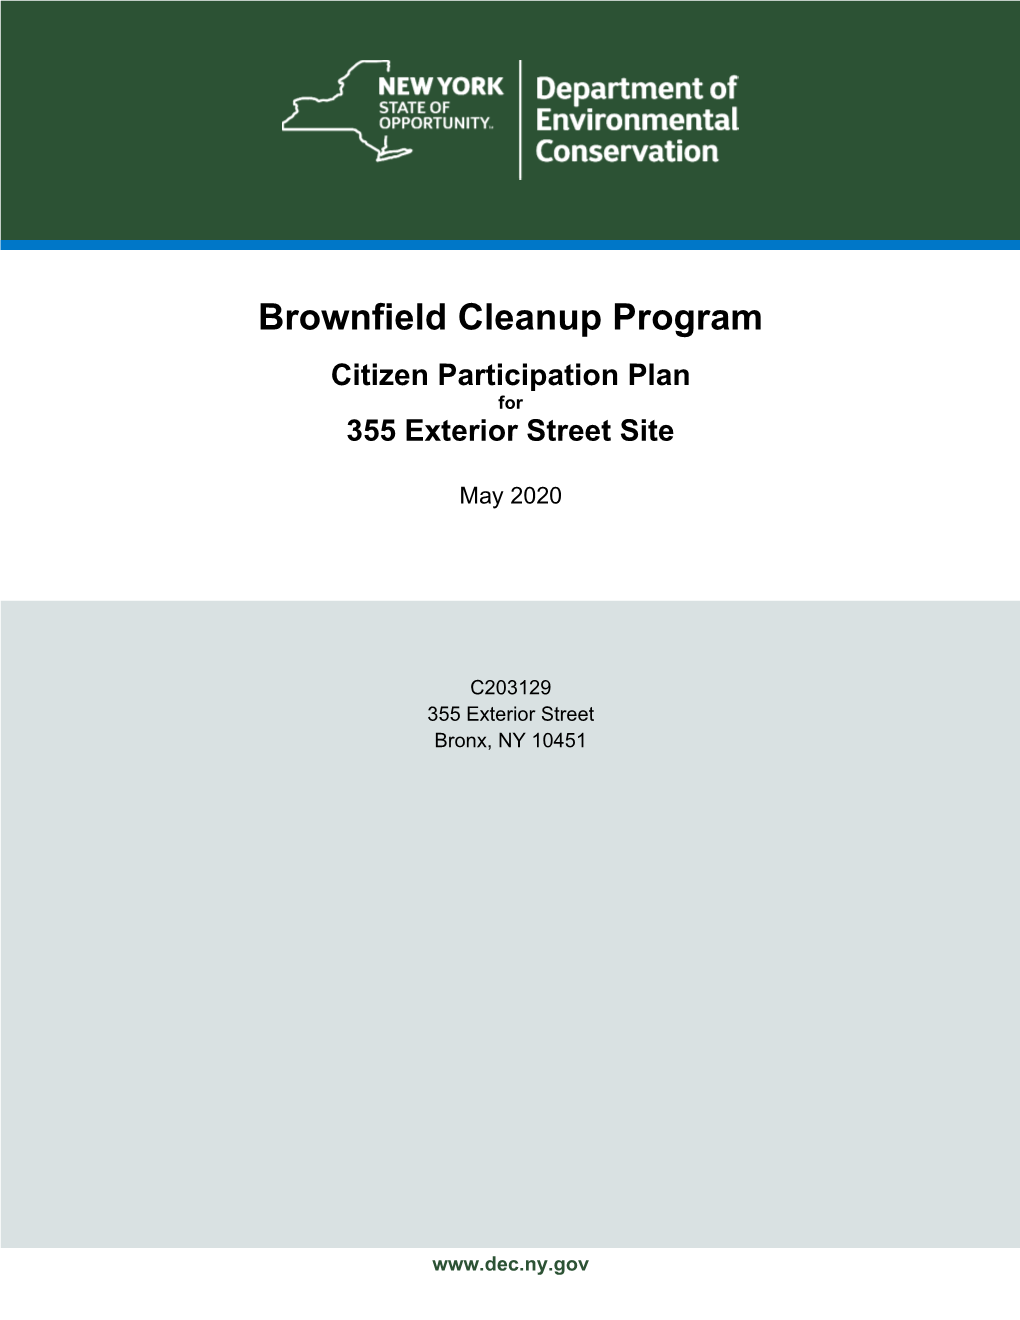 Brownfield Cleanup Program Citizen Participation Plan for 355 Exterior Street Site